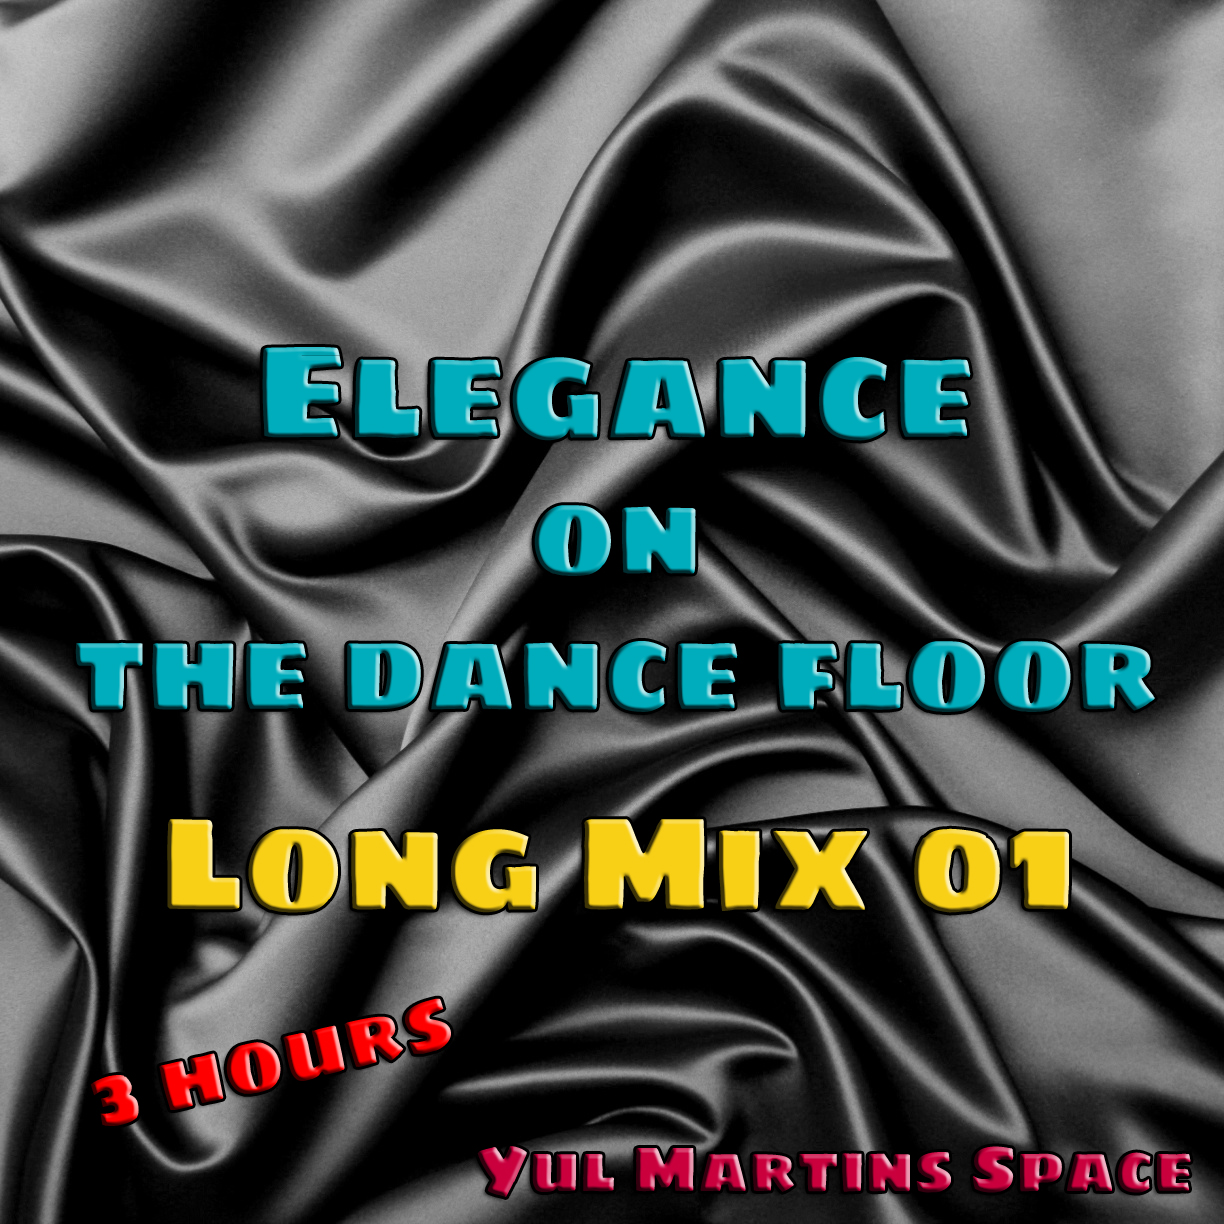 Elegance on the dance floor Long Mix 01